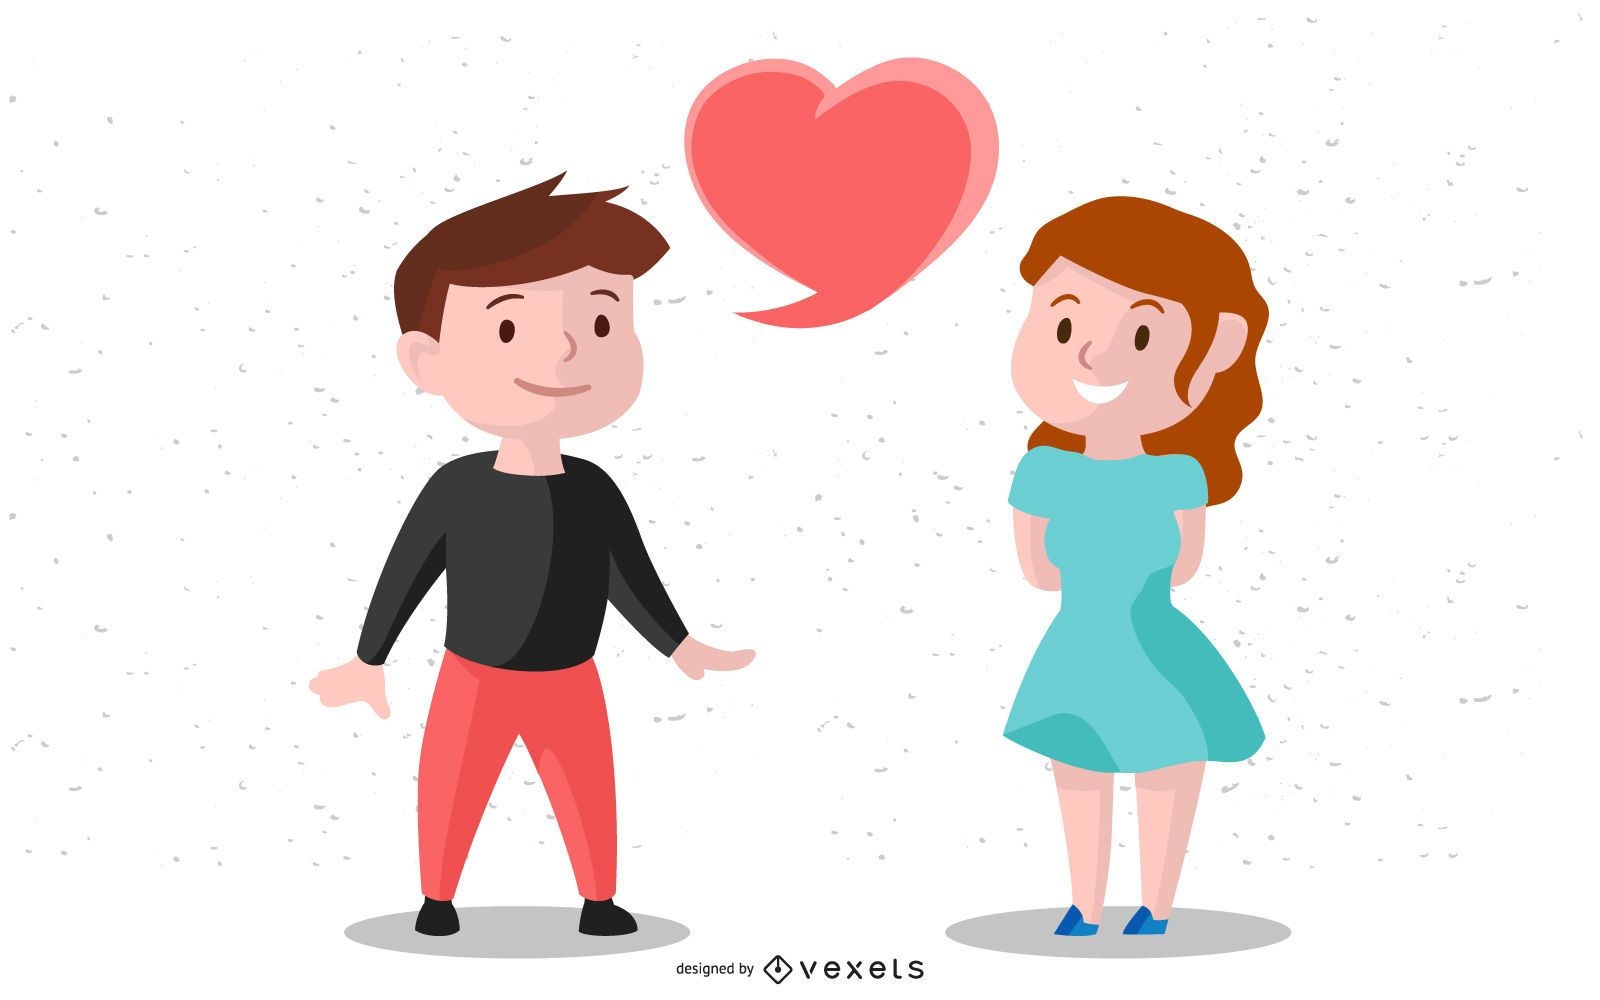 Herzform-Sprachblasen-Valentinsgruß-Karikatur